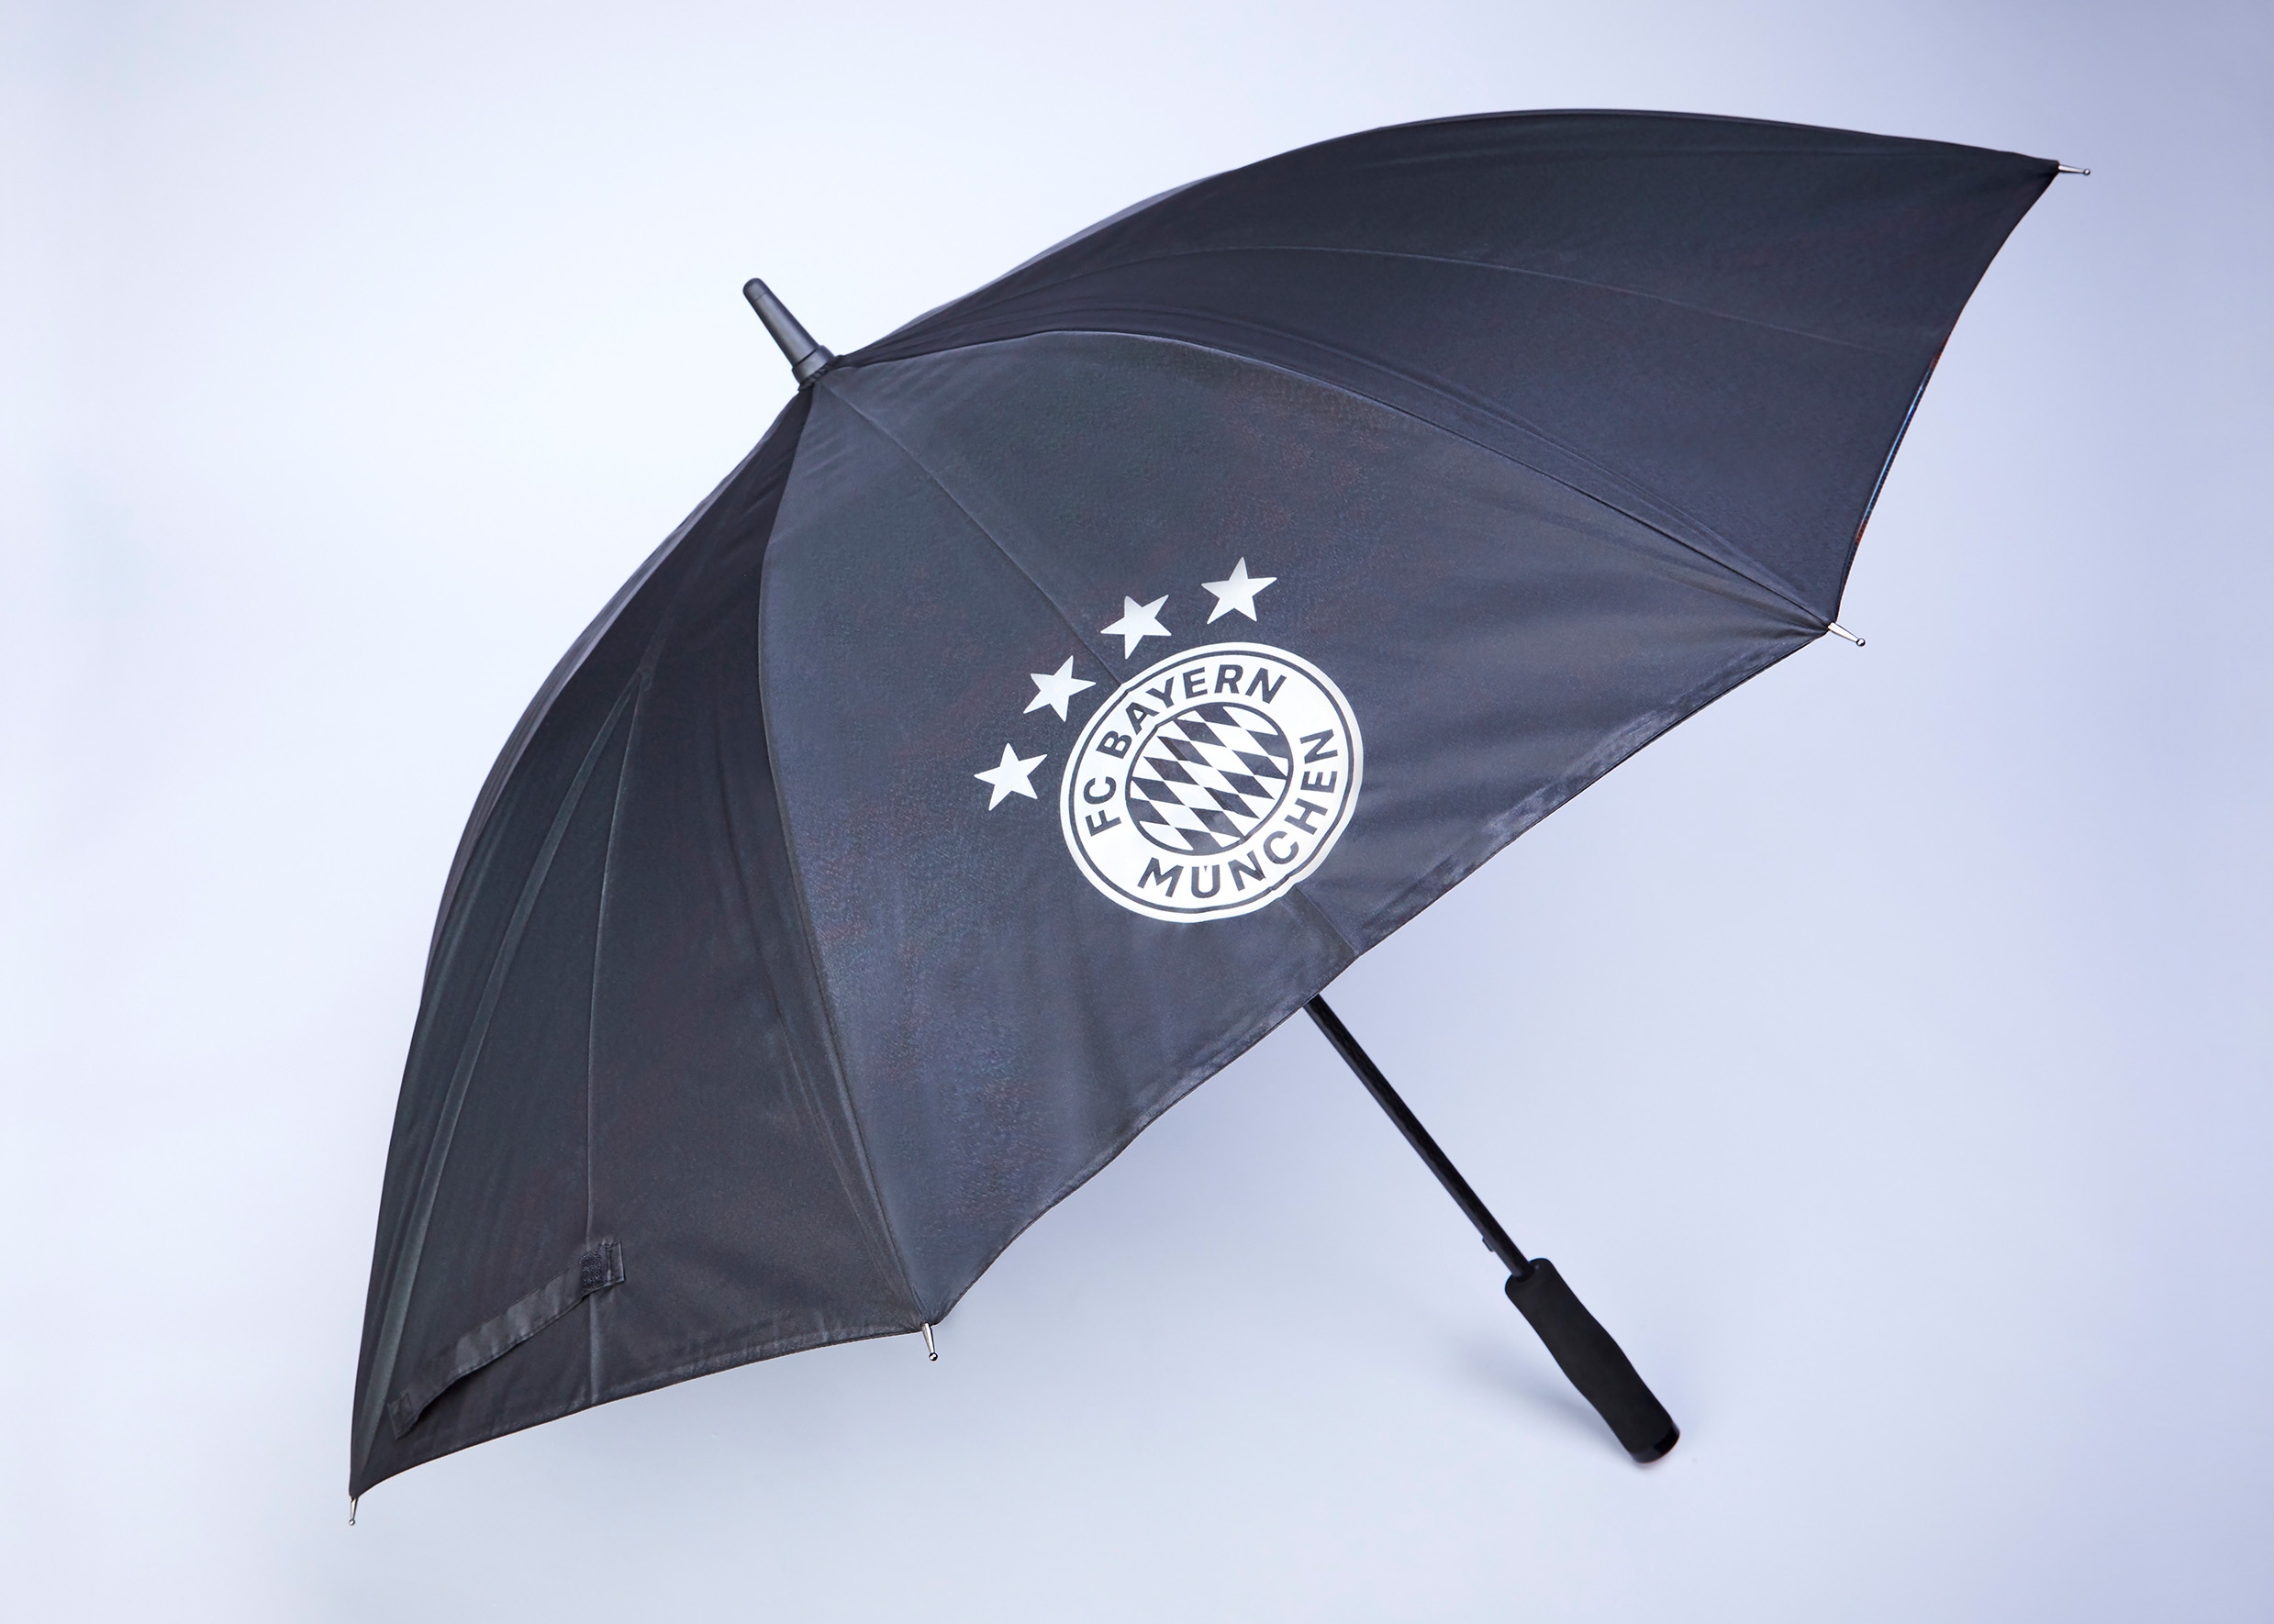 Fanartikel herstellen lassen, Fanartikelhersteller, Fanschal Hersteller, Regenschirm